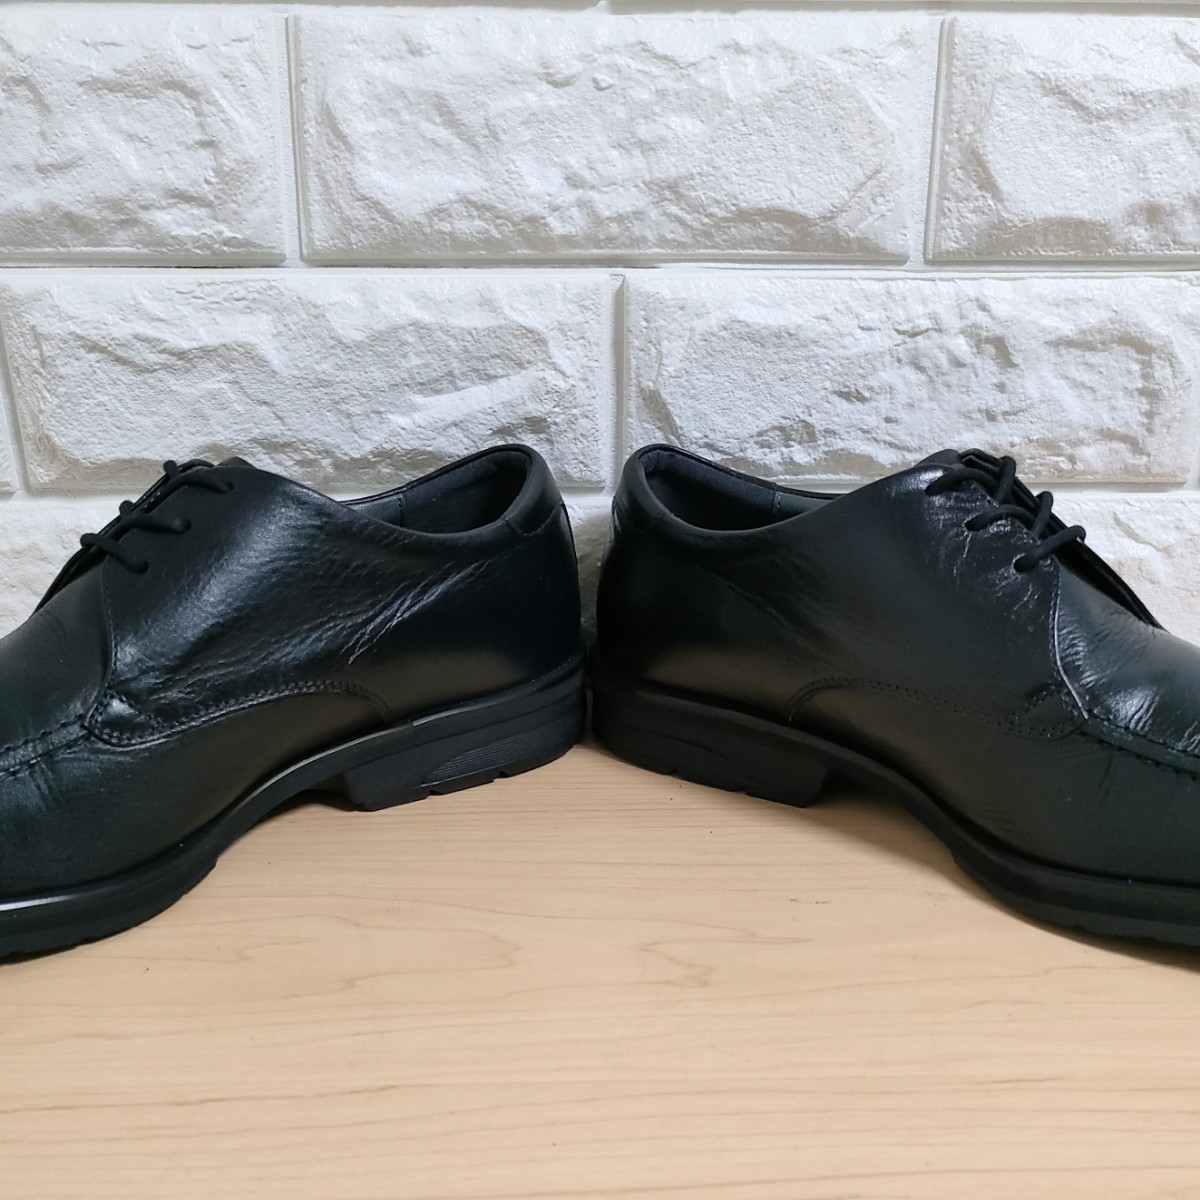  Asics Ran walk walaji25.0.asics RUNWALK WALLAGE WAY828 business shoes leather shoes leather shoes dress shoes 